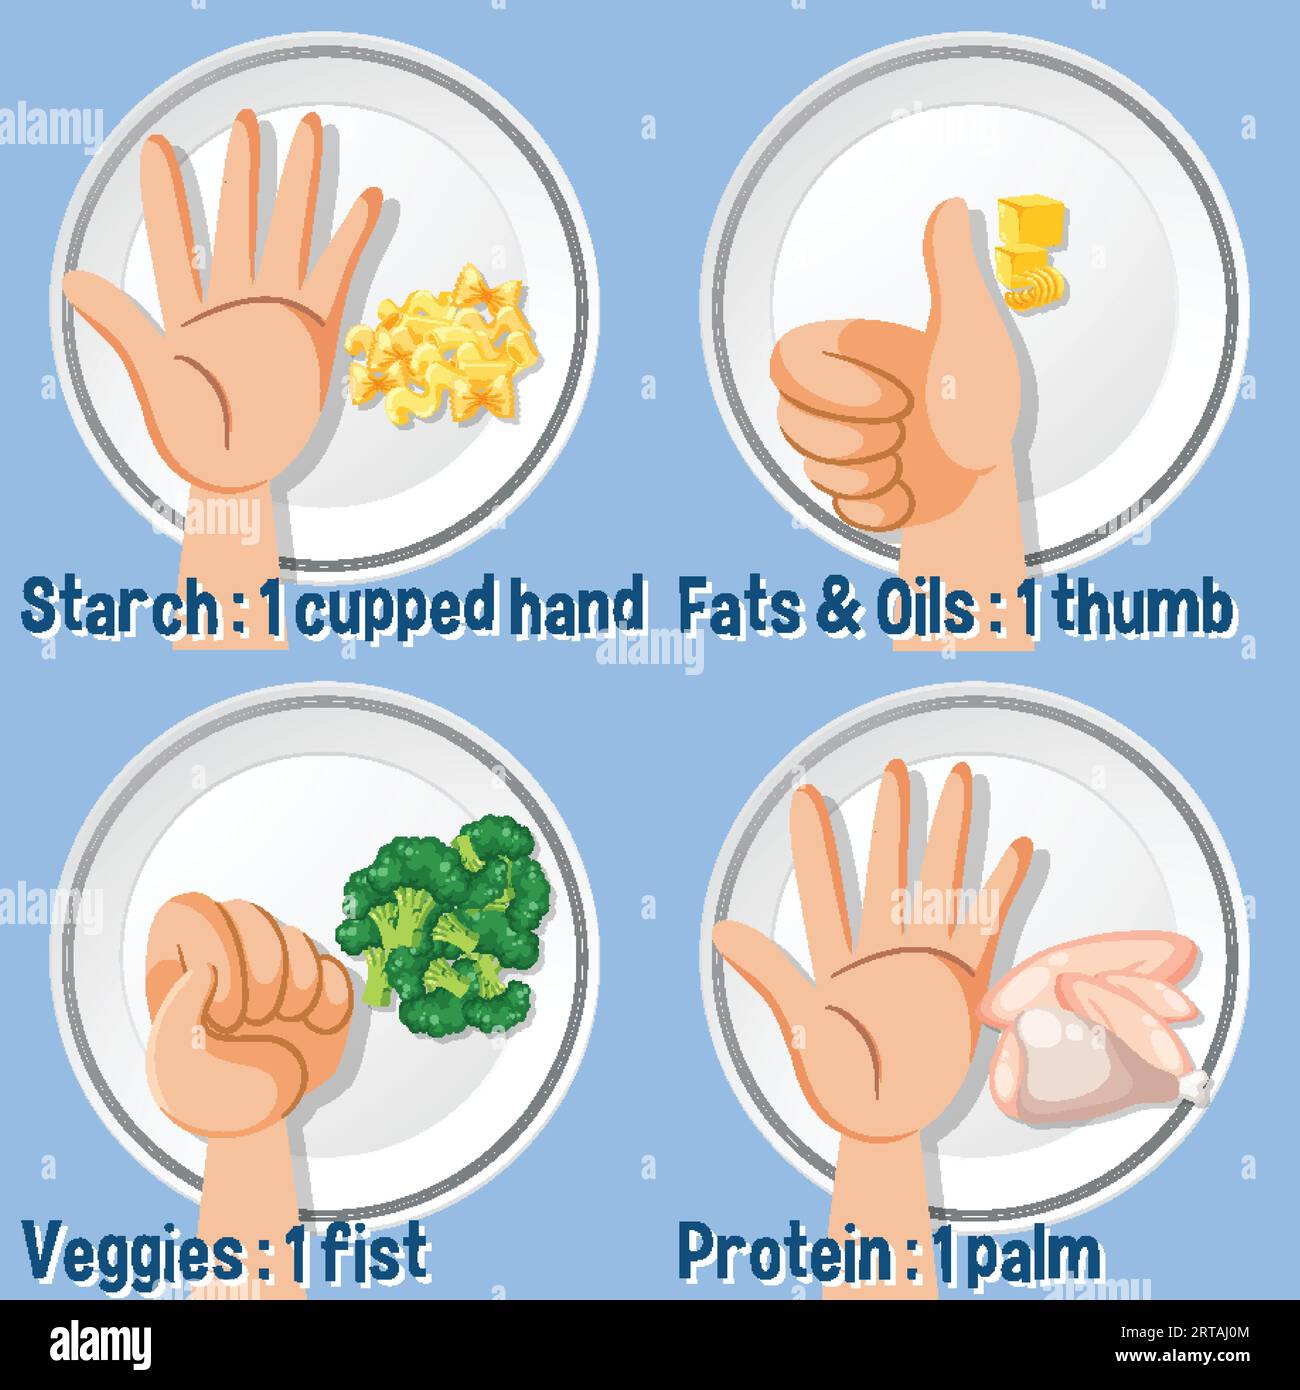 Portion Control: Comparing Food Amounts Using Human Hand illustration Stock Vector